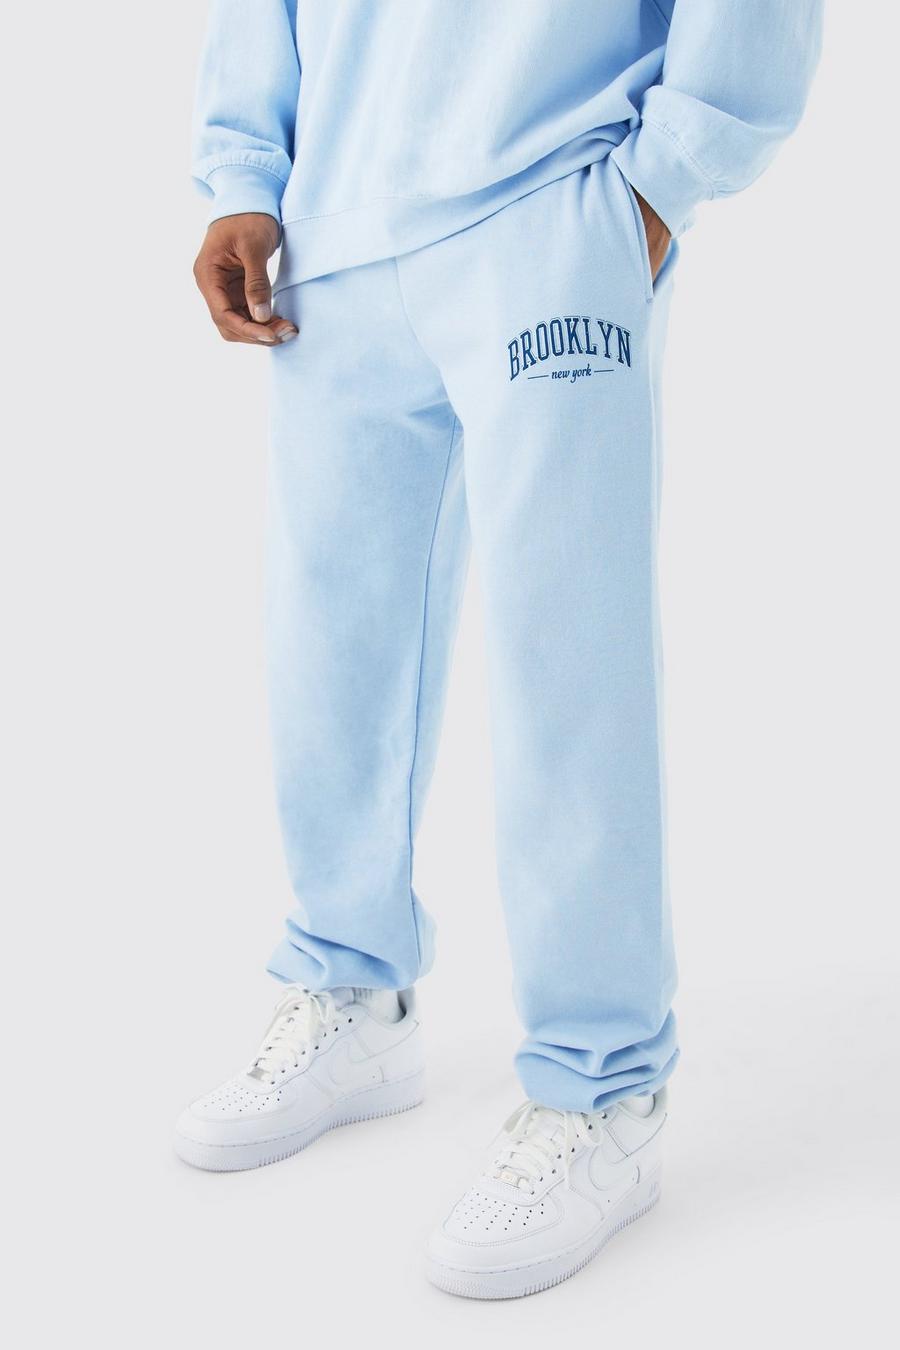 Pantaloni tuta oversize Brooklyn NYC, Light blue